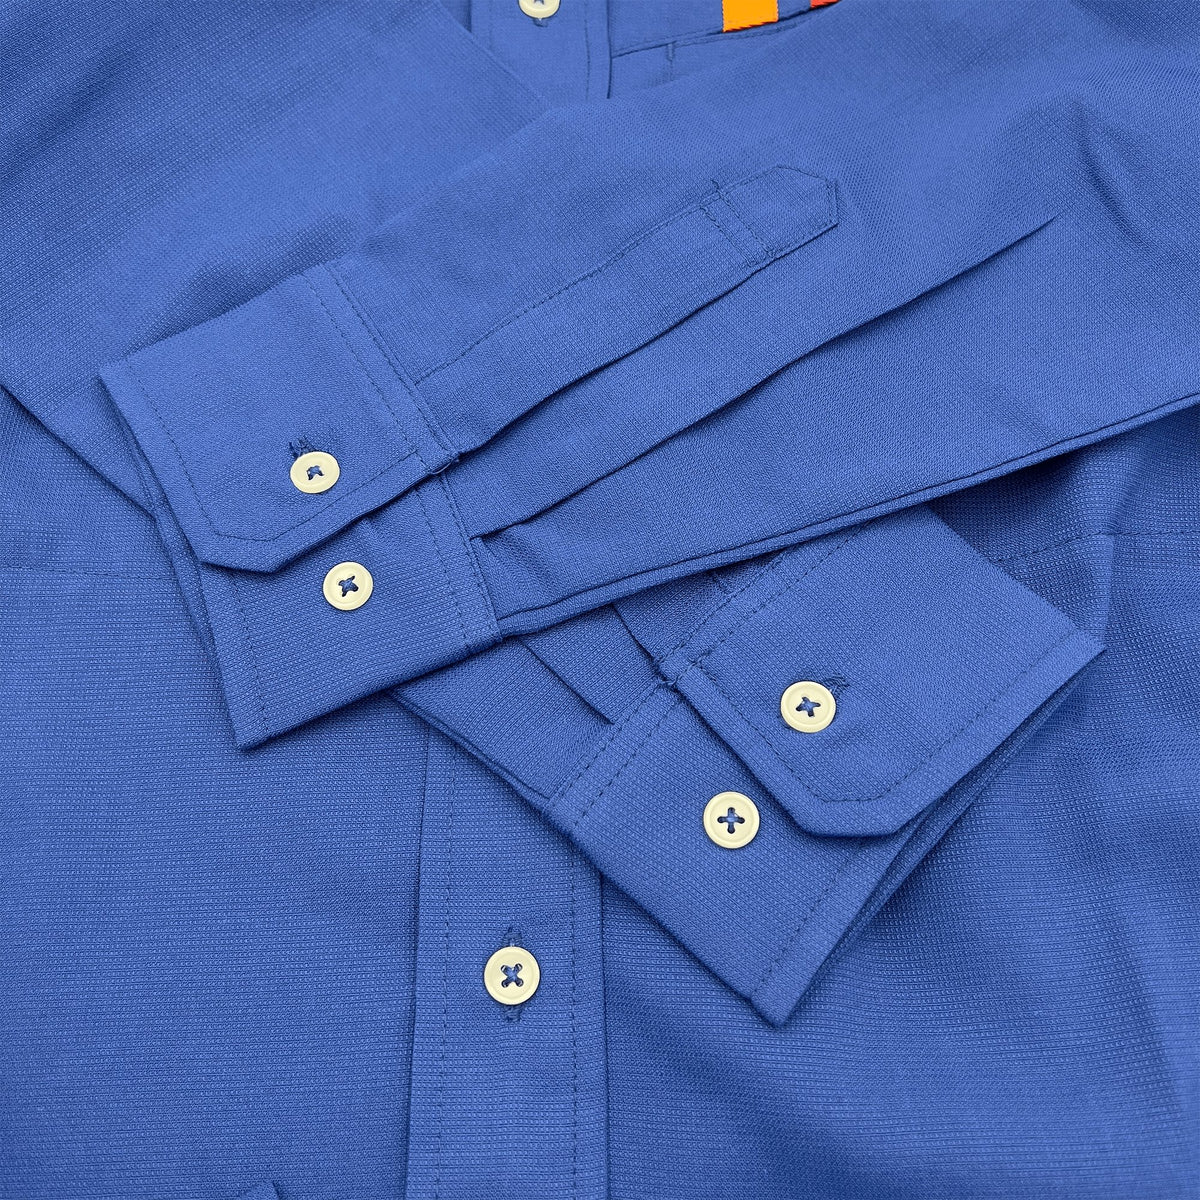 Japan JDM Genuine ENEOS Oil Staff Long Sleeve Button Up Shirt Blue - Sugoi JDM